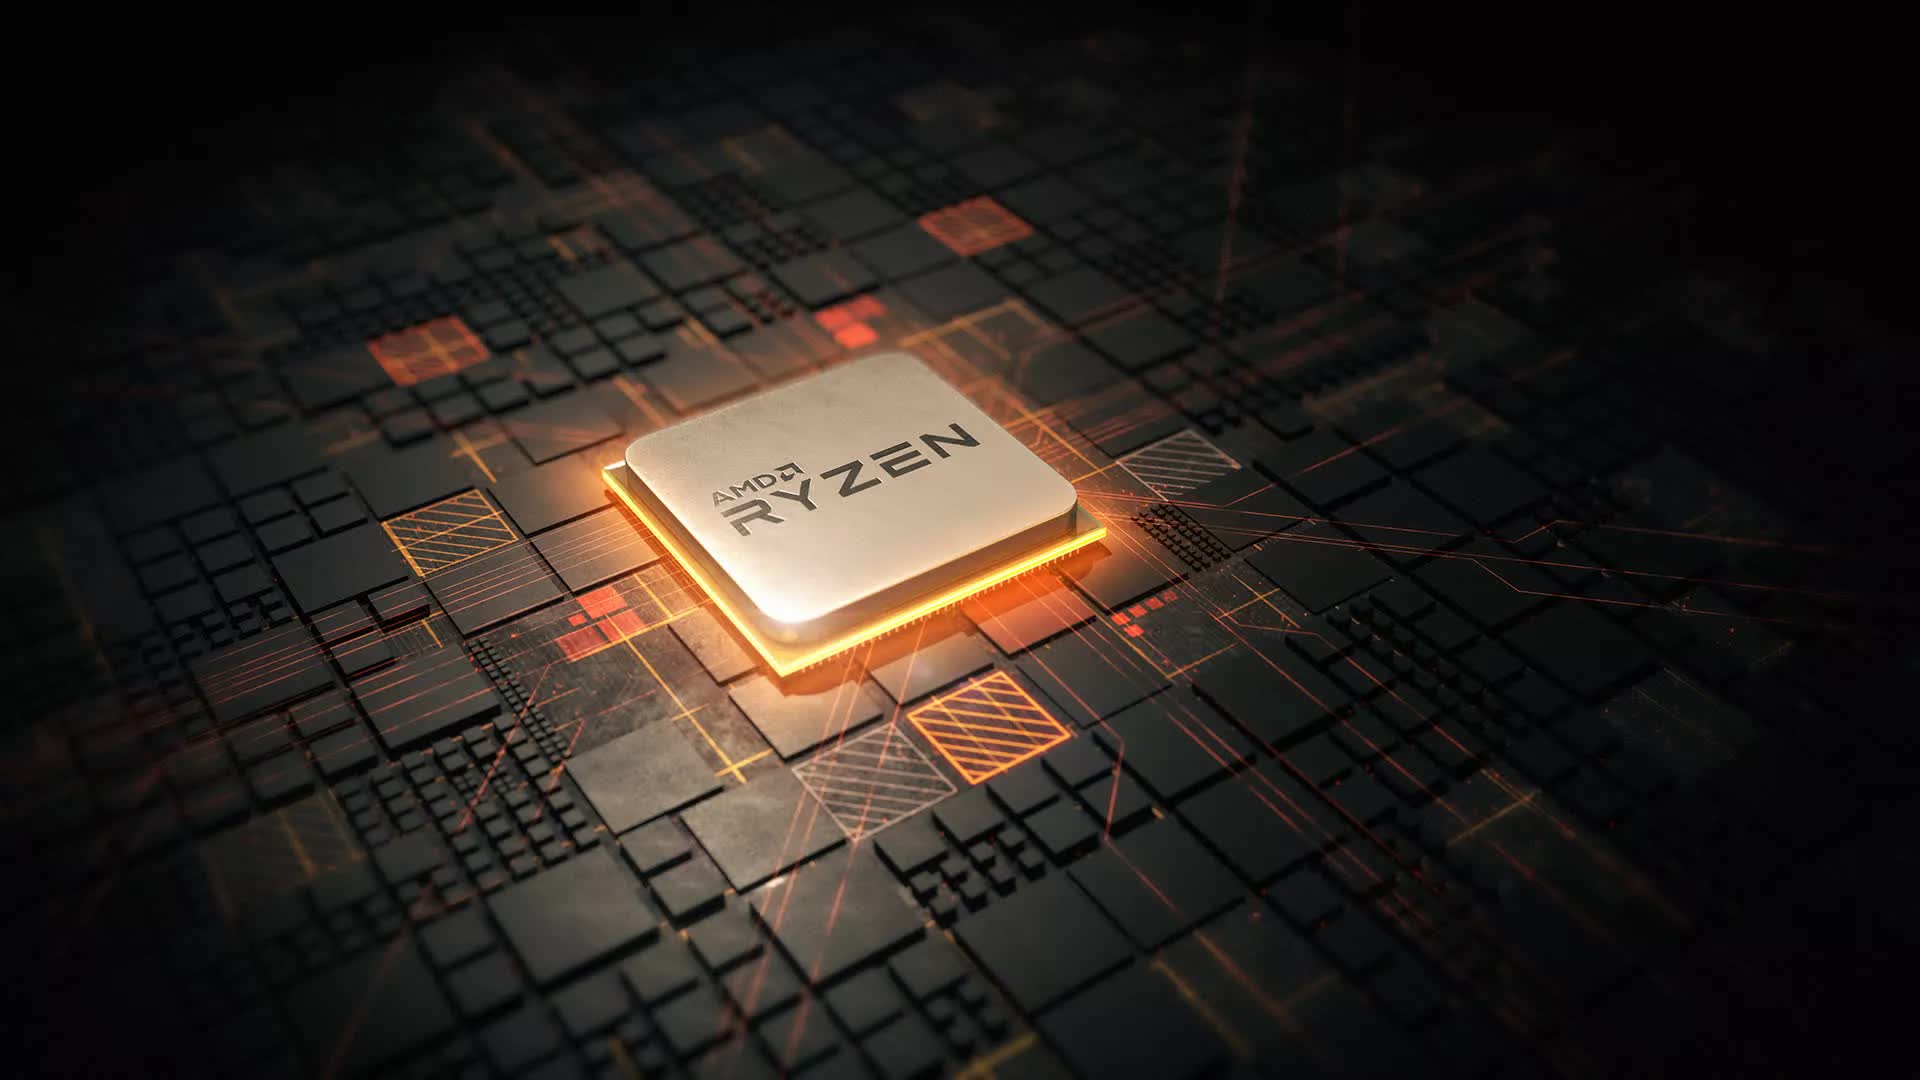 AMD's Ryzen 7 5800U shows up on Geekbench, looks promising against Zen 2 mobile